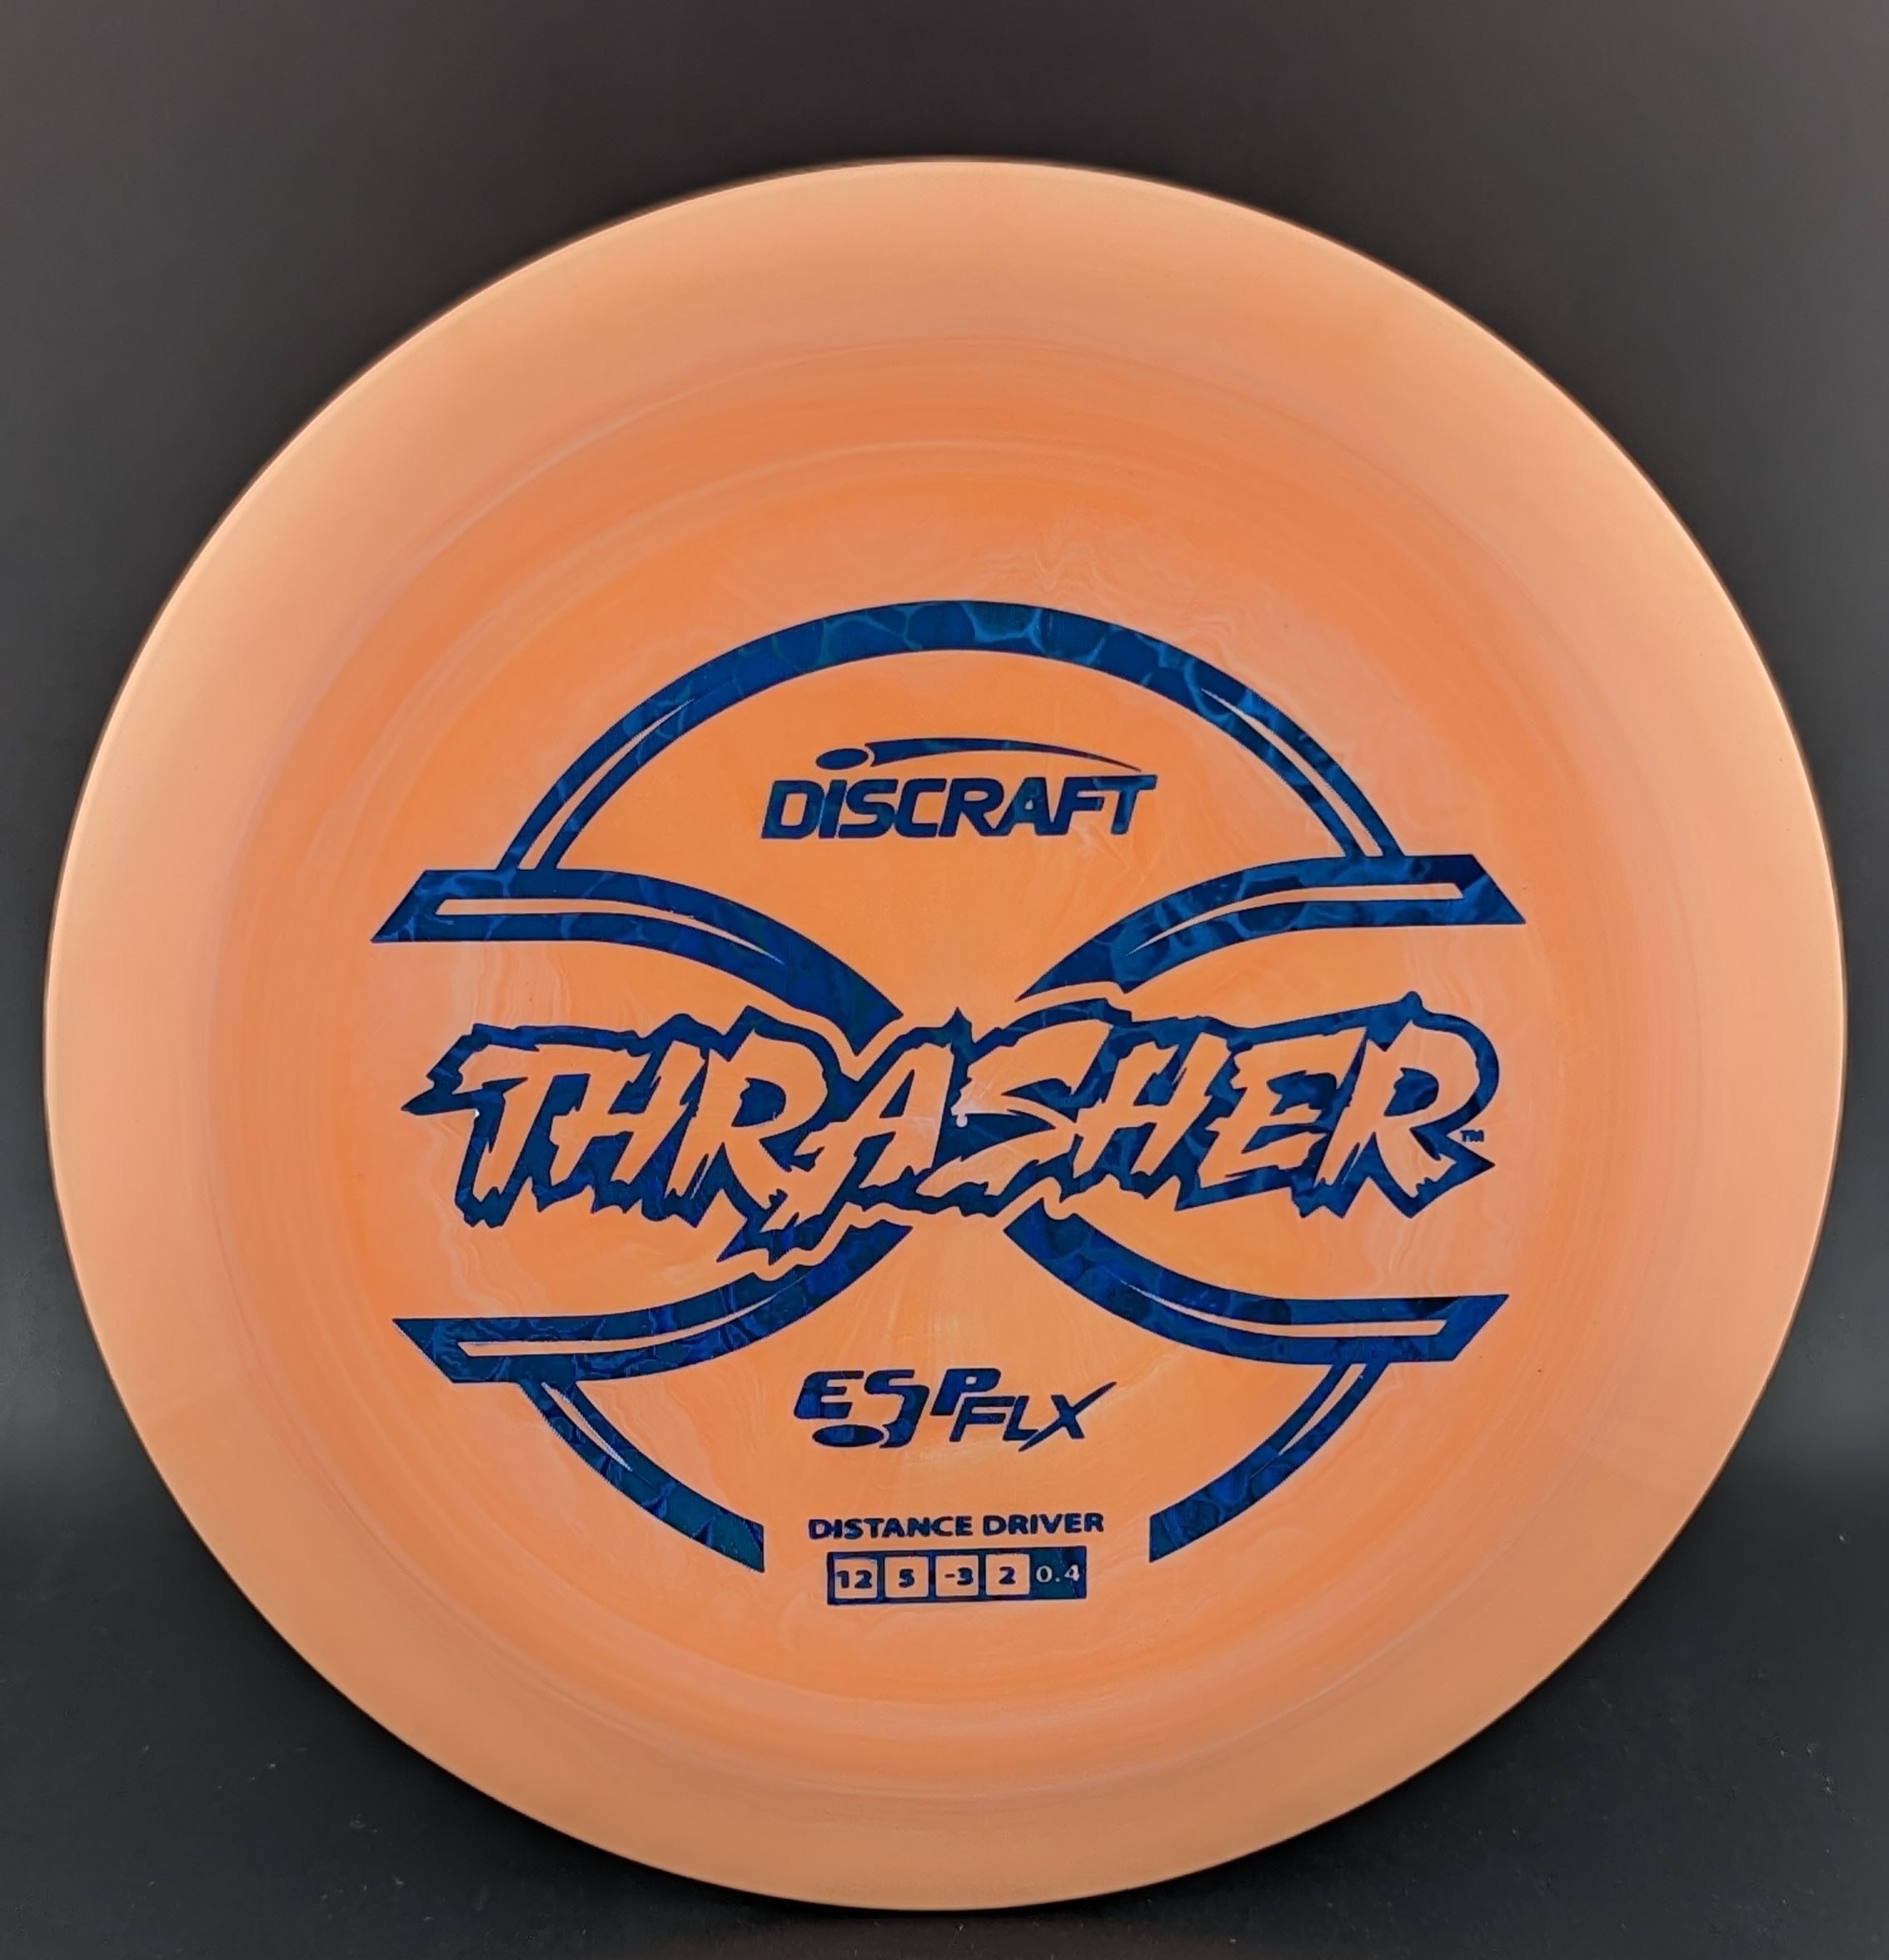 Discraft ESP Flx Thrasher